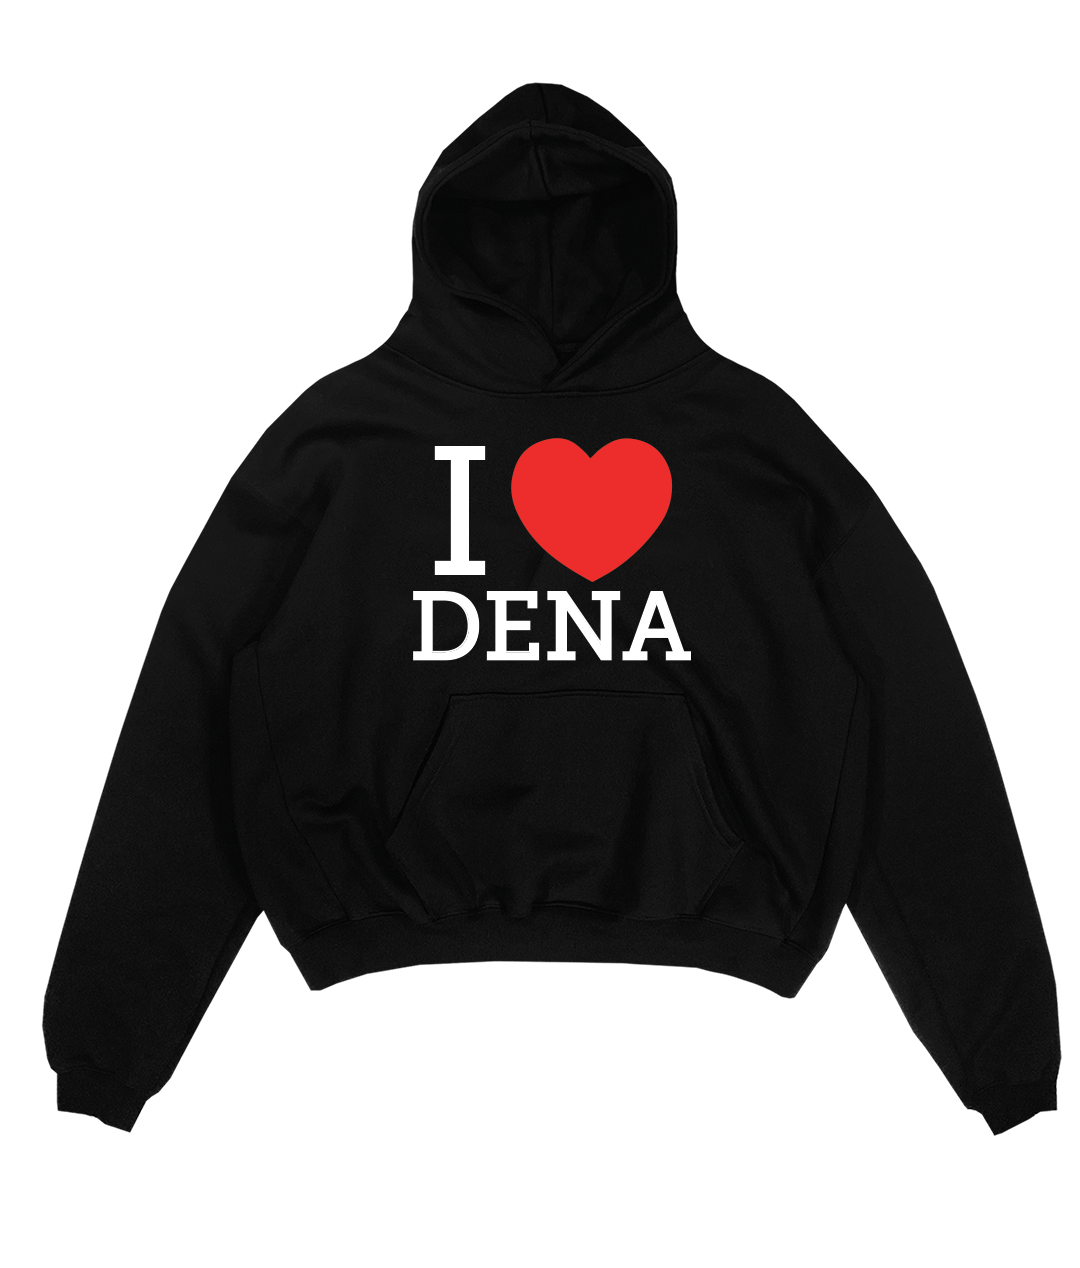 I LOVE DENA - BLACK HOODIE